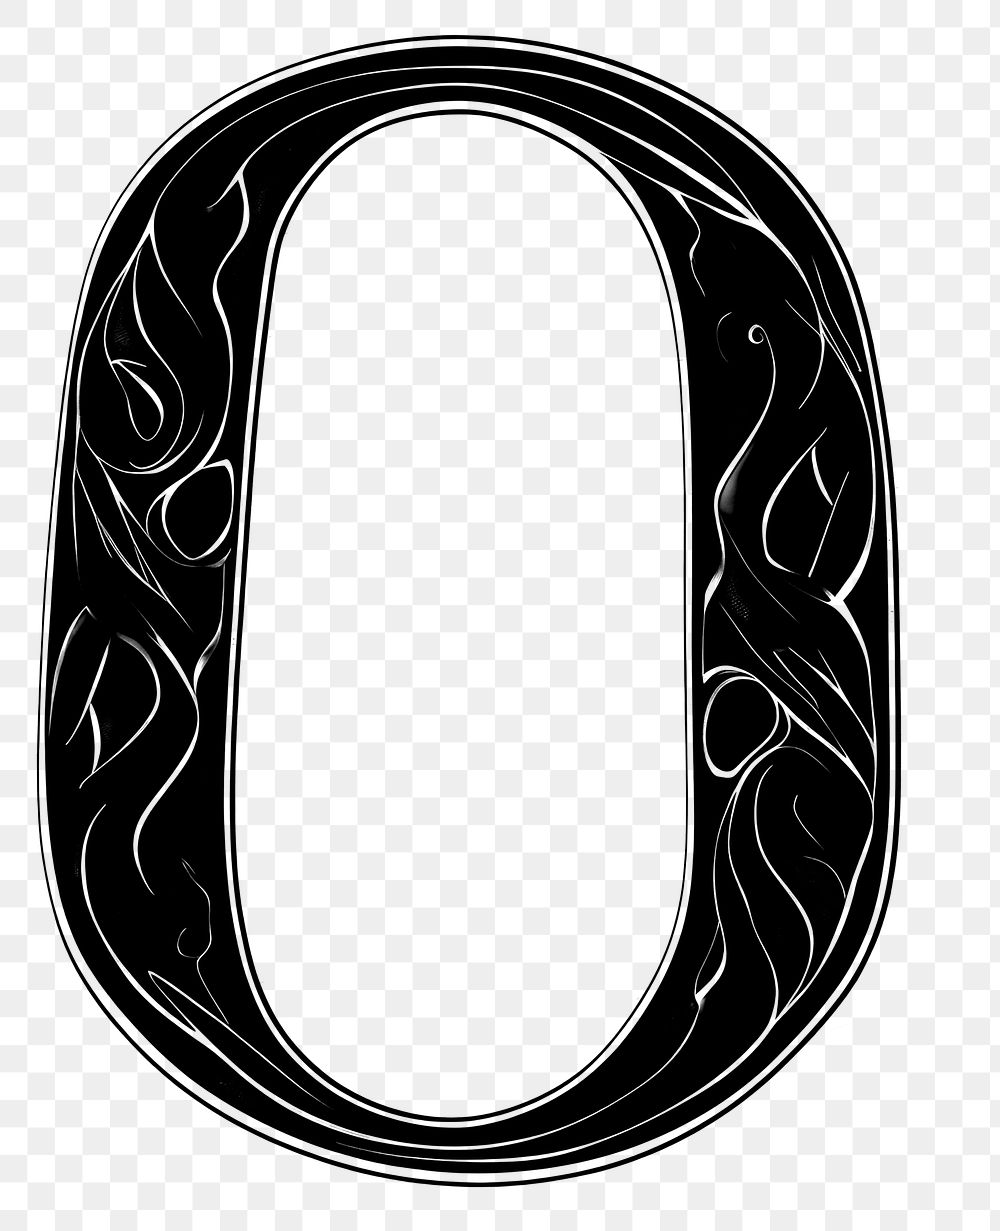 PNG Number 0 alphabet horseshoe symbol plate.